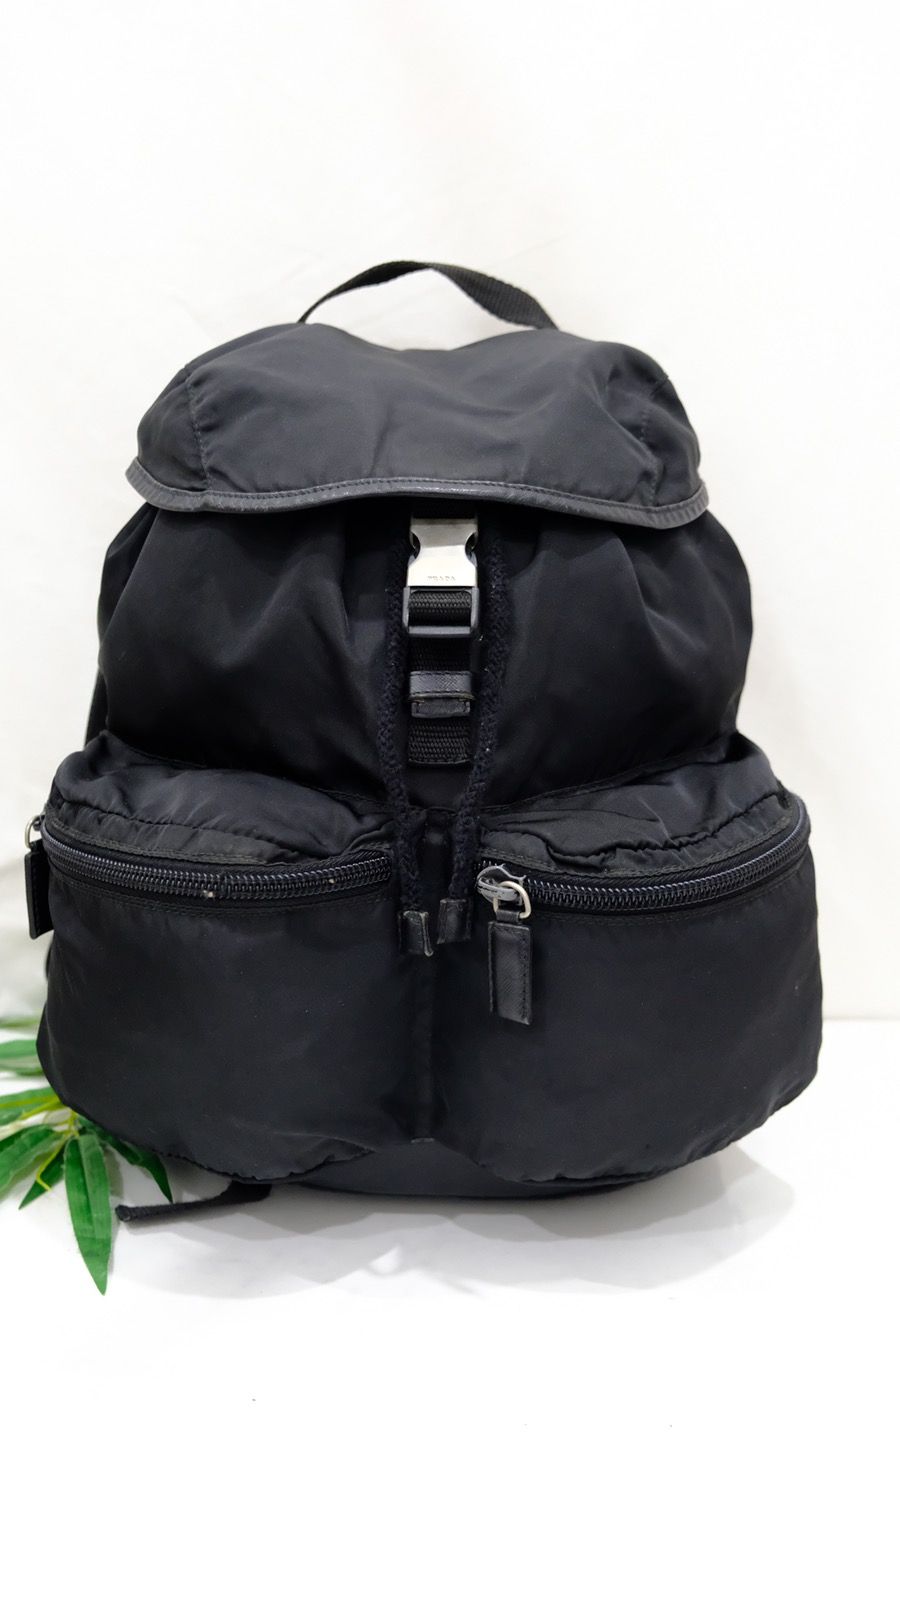 Authentic prada backpack Black Nylon Double pocket - 2